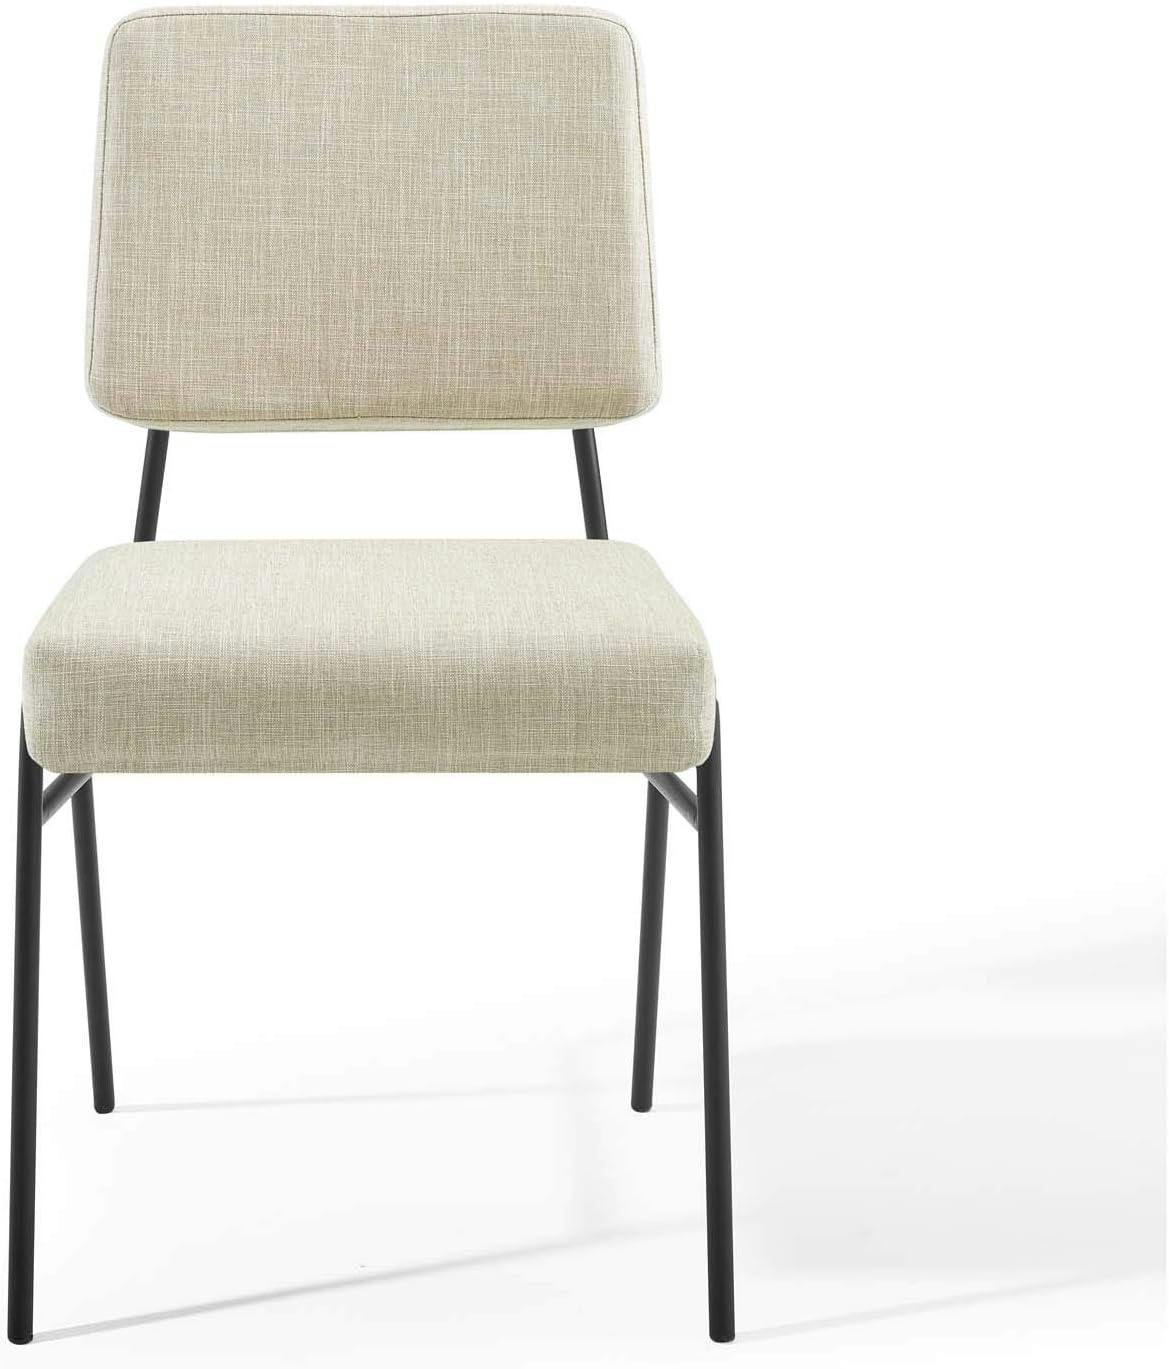 Elevate Matte Black Stainless Steel Upholstered Side Chair in Beige